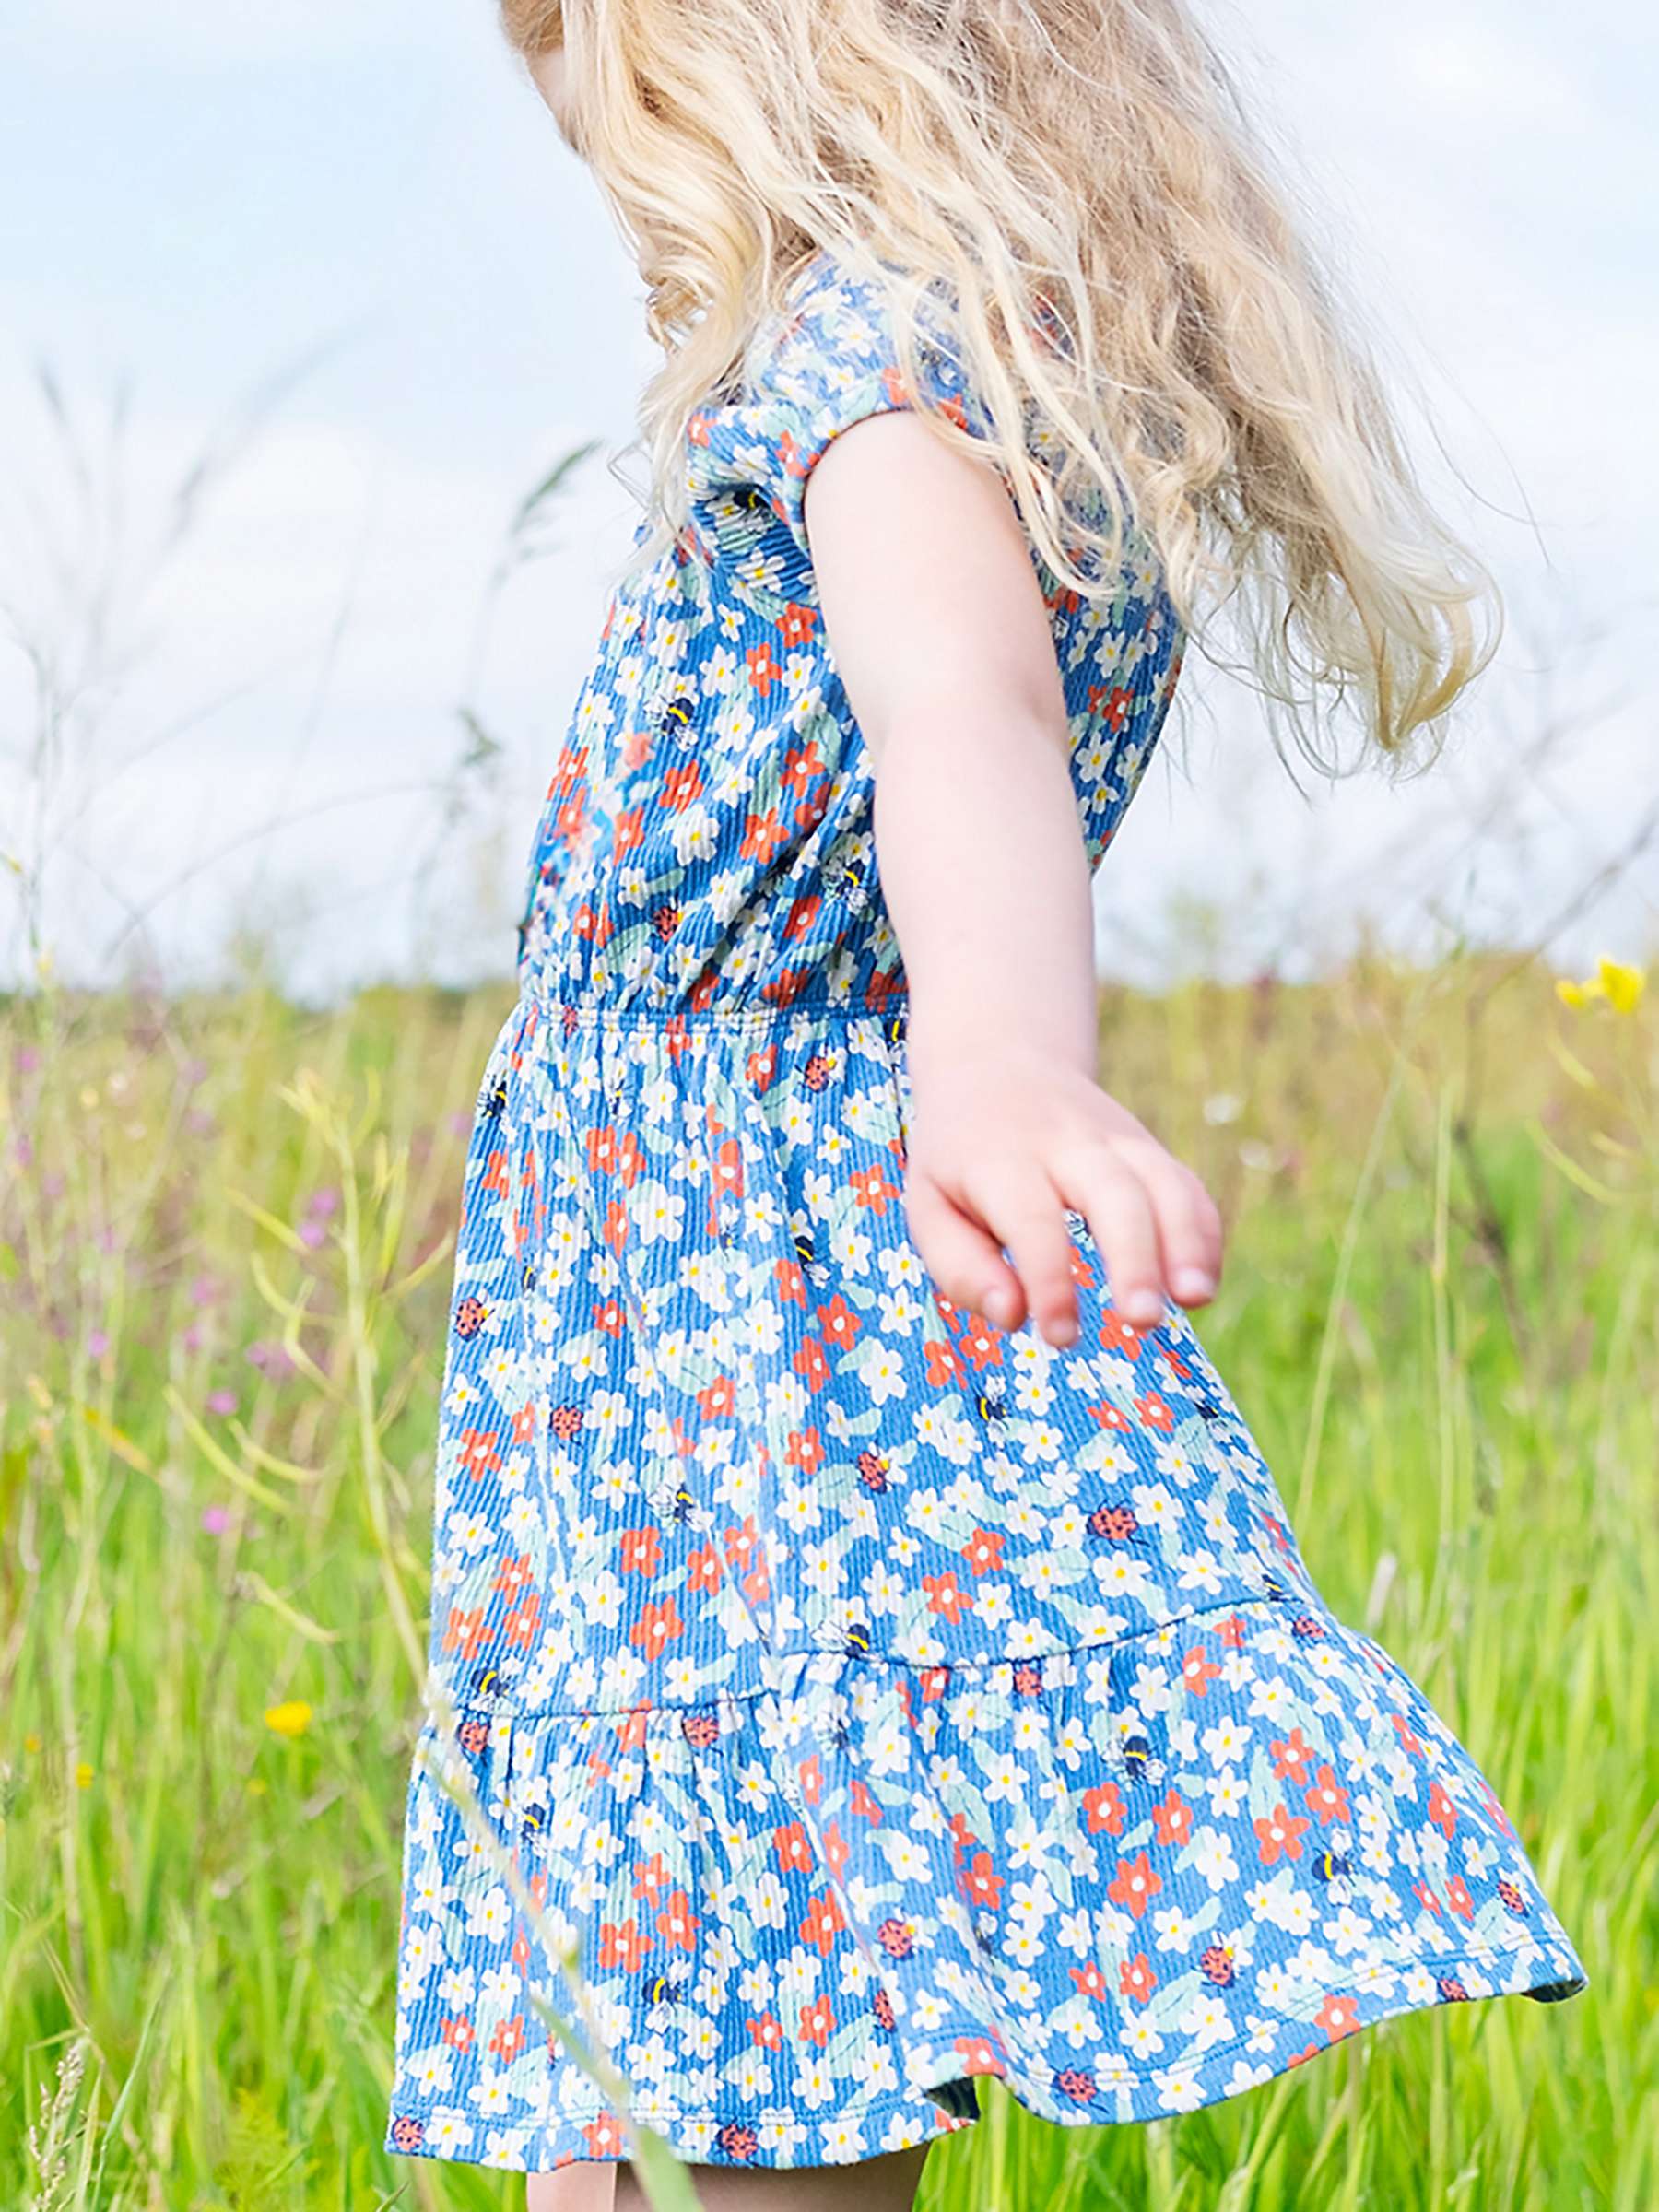 Buy Frugi Kids' Vienna Floral Fun Organic Cotton Blend Tiered Dress, Blue Online at johnlewis.com